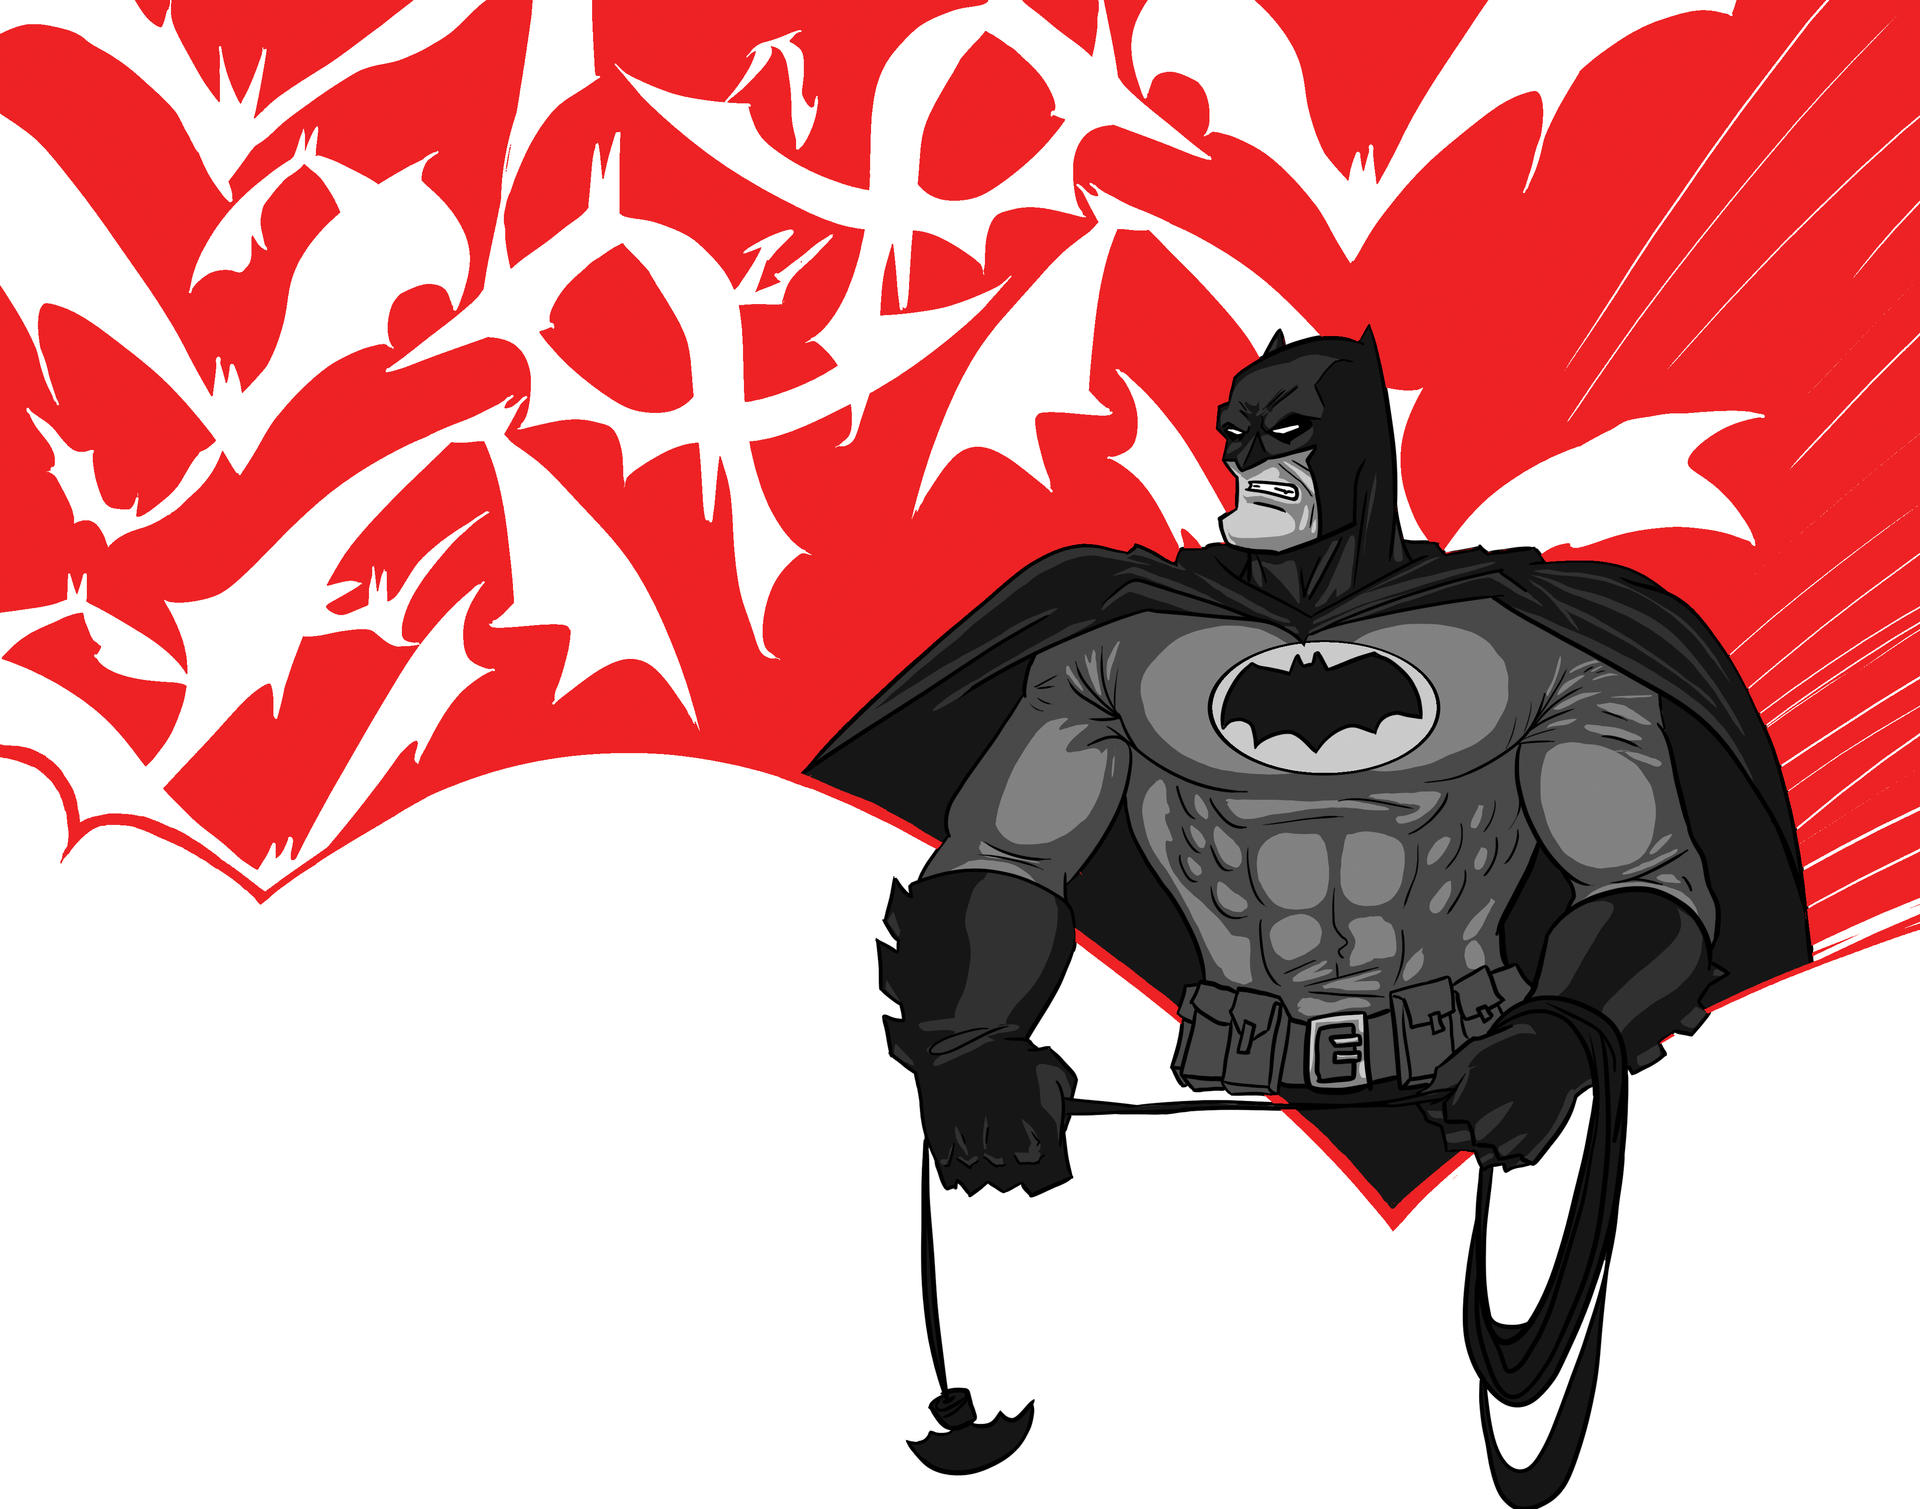 Batman painting planning